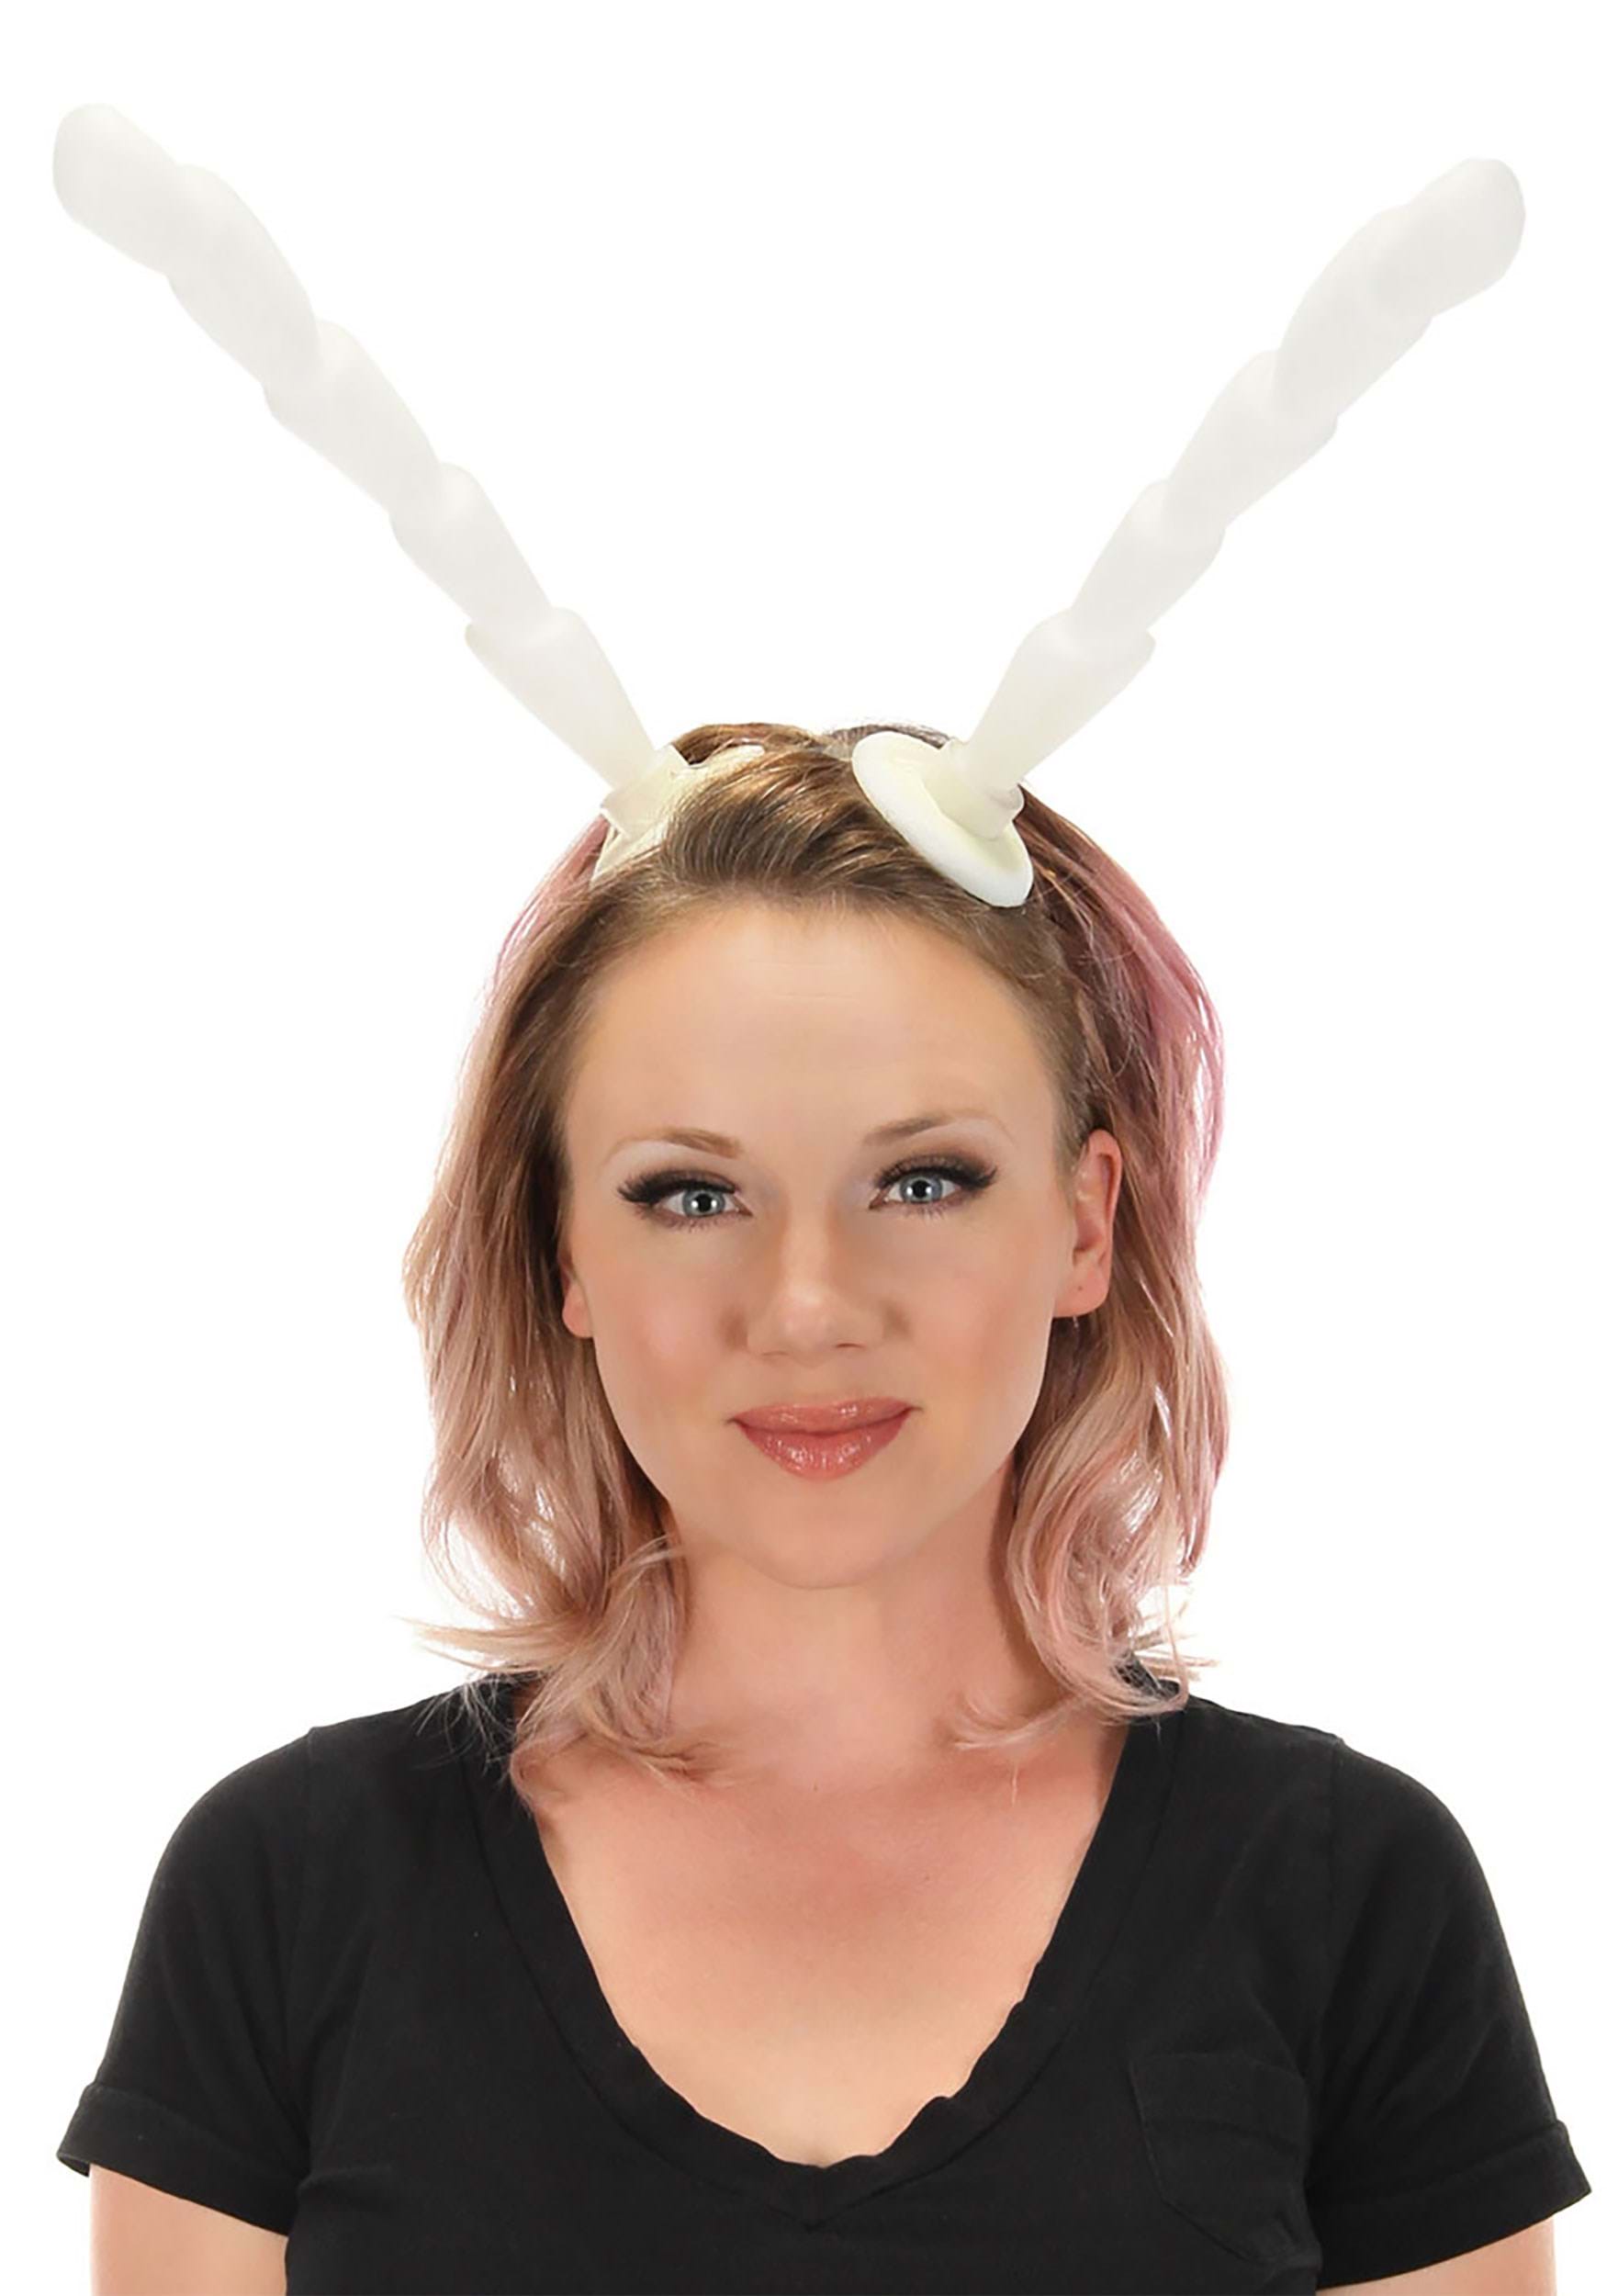 Bright Light-Up Insect Antennae LumenHorns Costume Headband